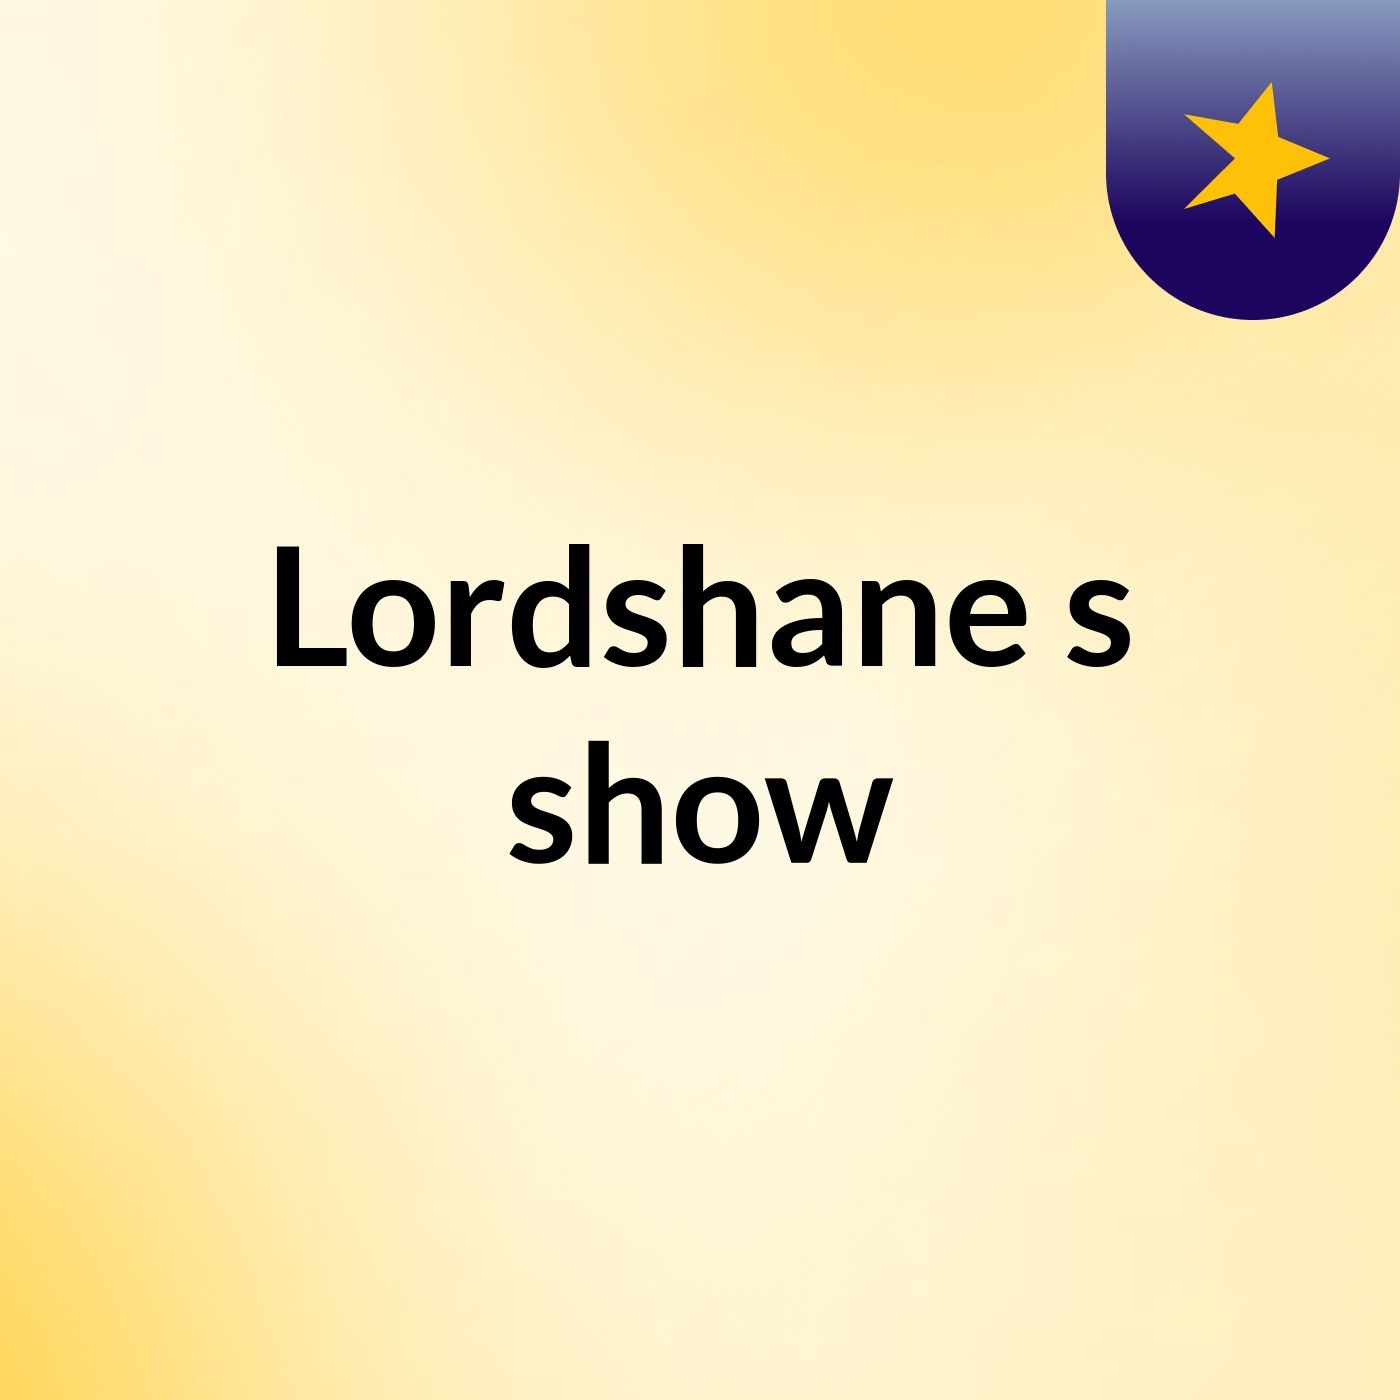 Lordshane's show